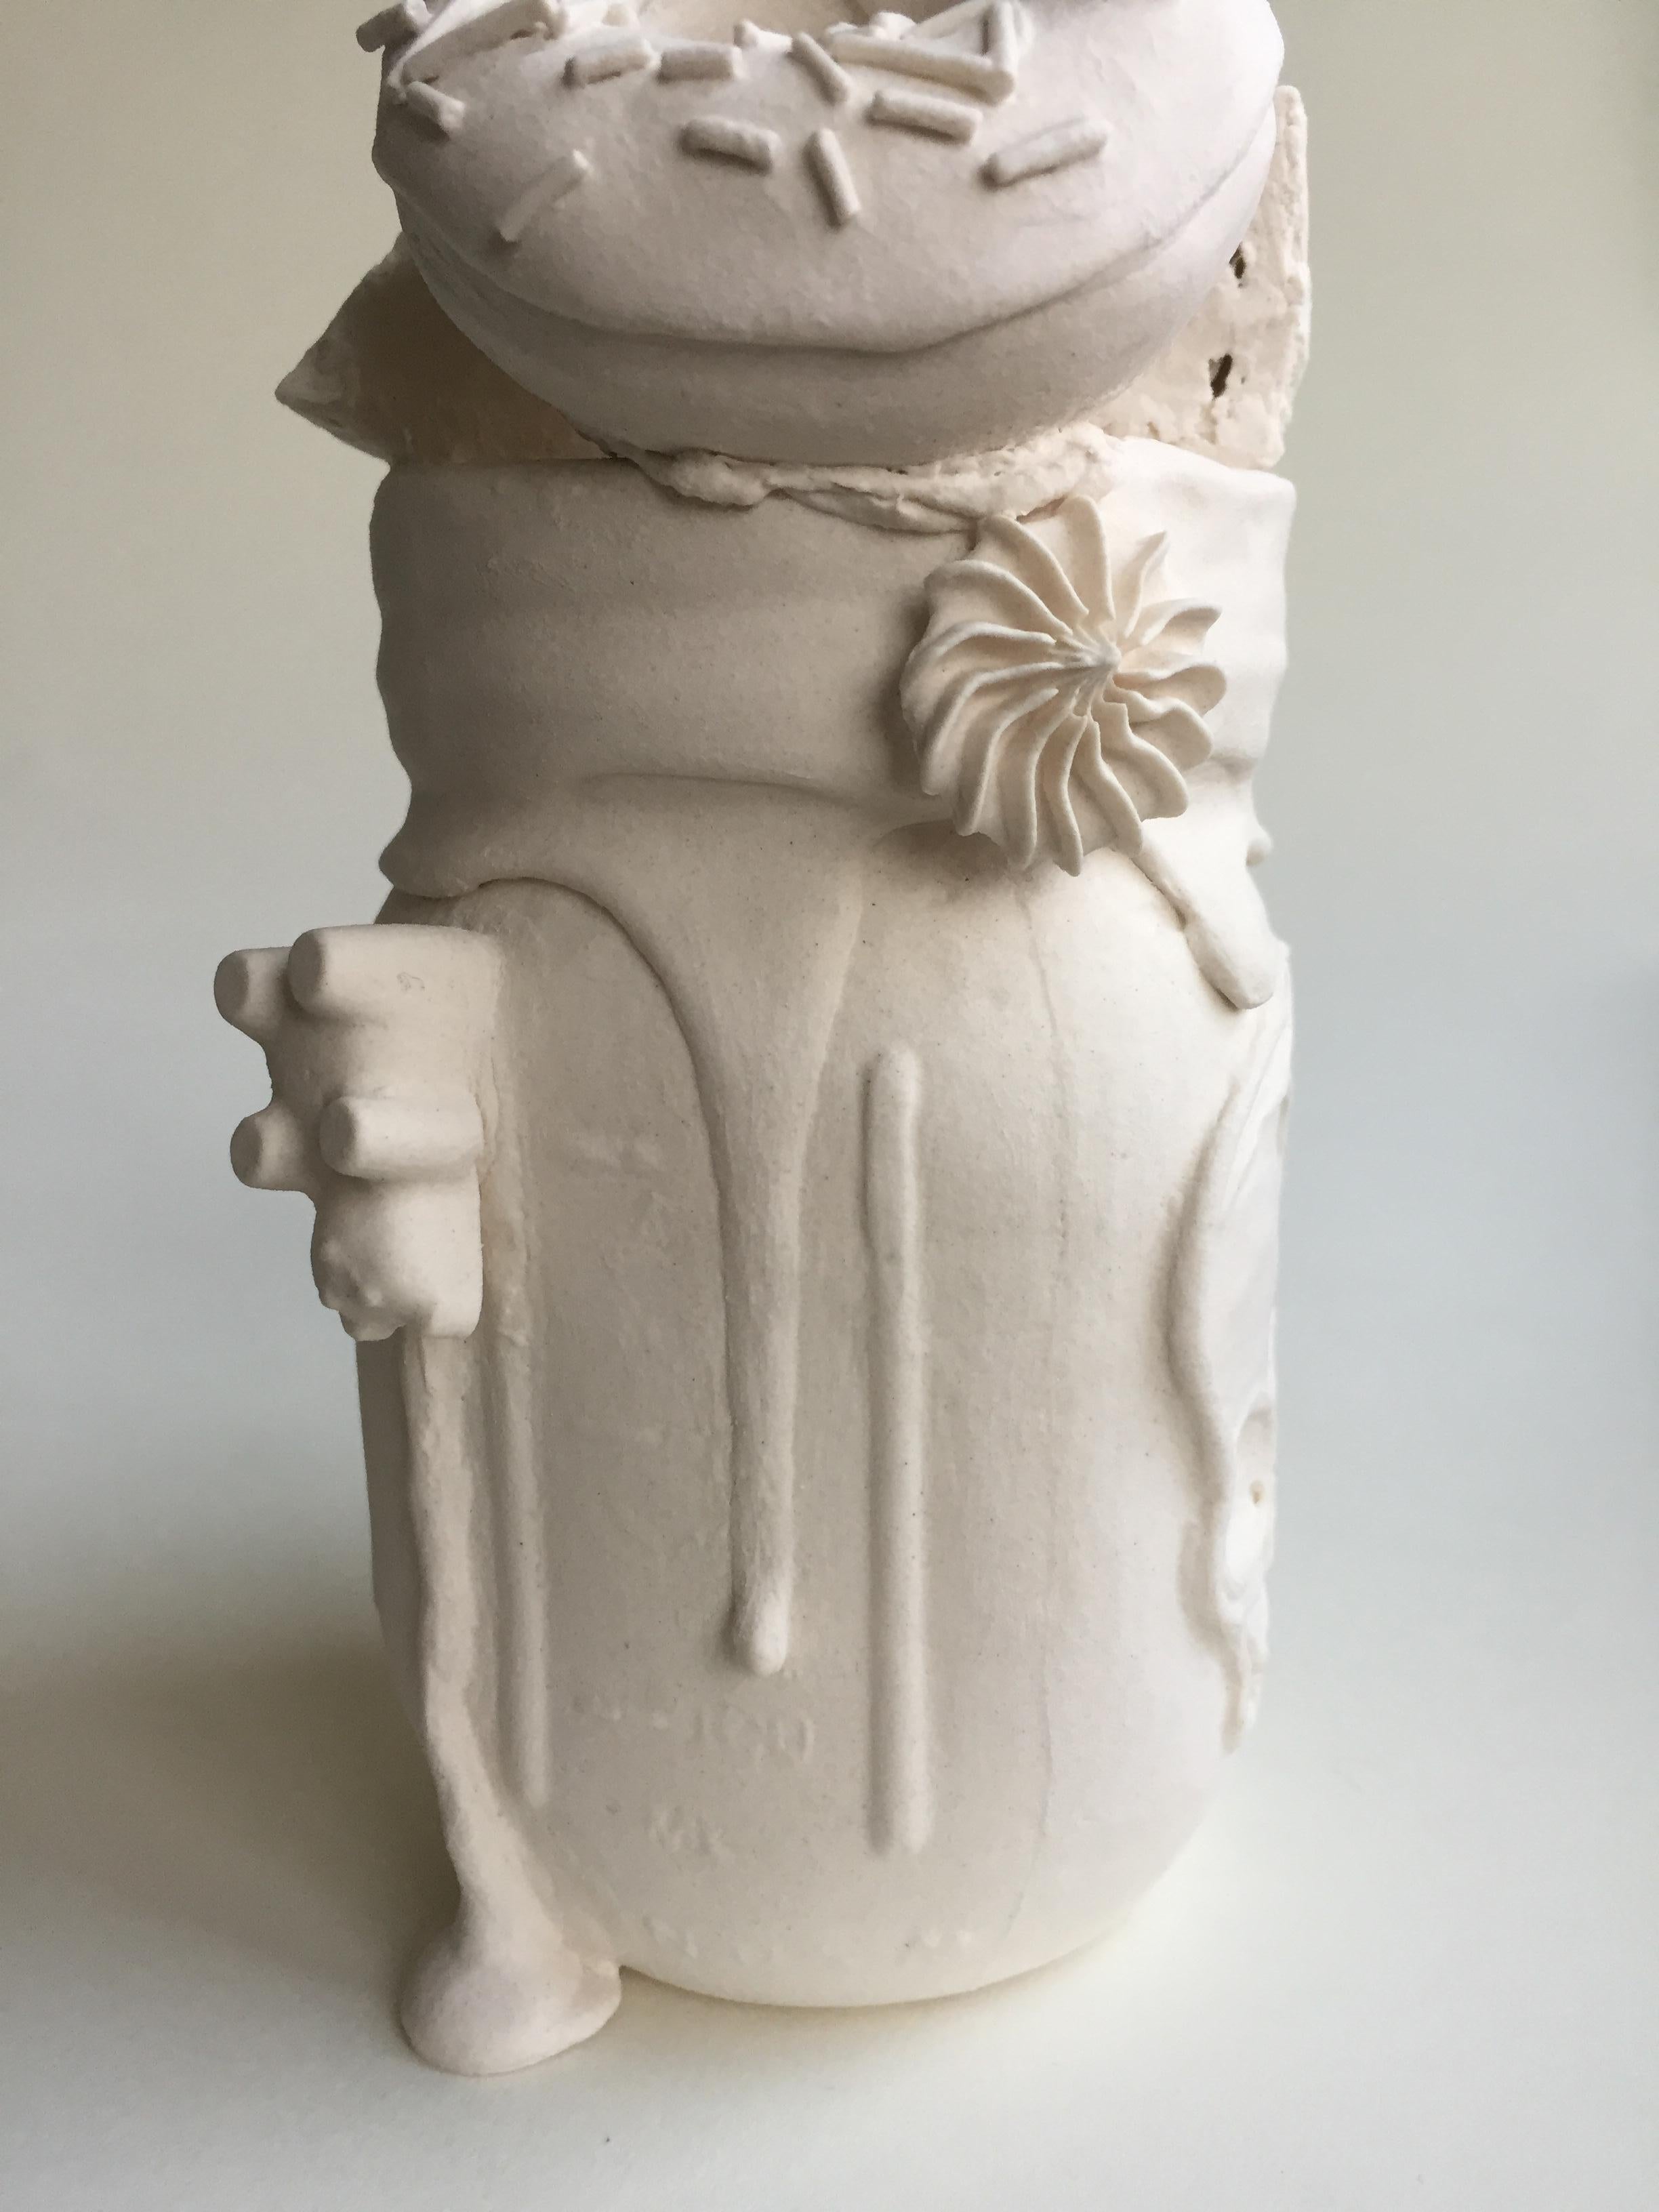 Ice cream float jar V - Sculpture by Jacqueline Tse